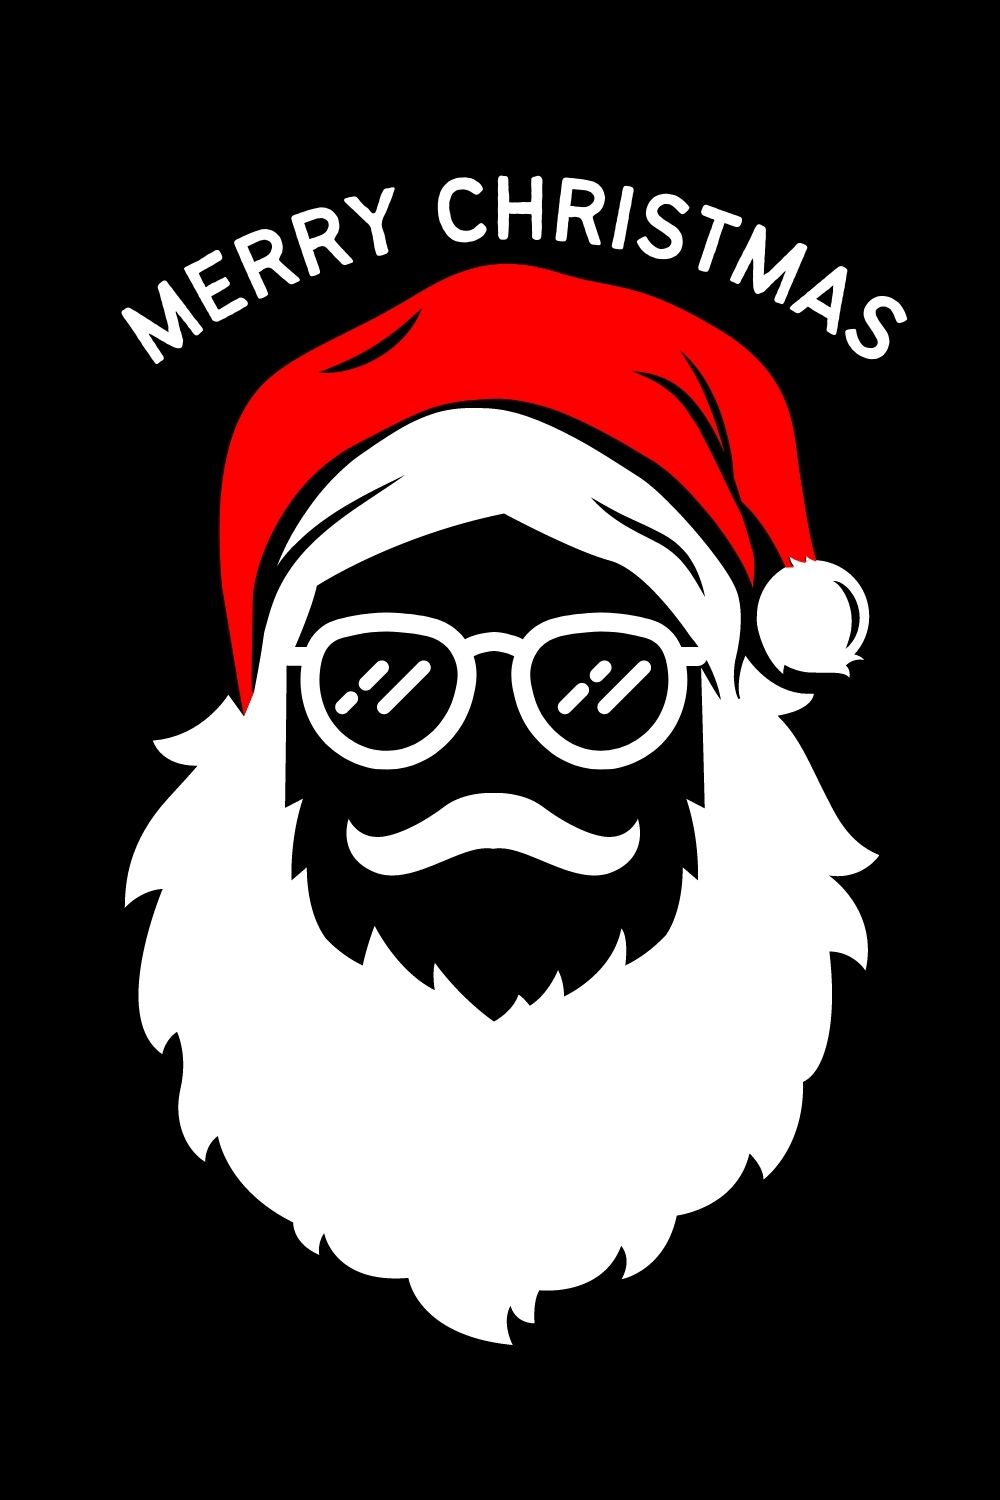 Merry Christmas Santa Claus Digital Printable Design pinterest image.